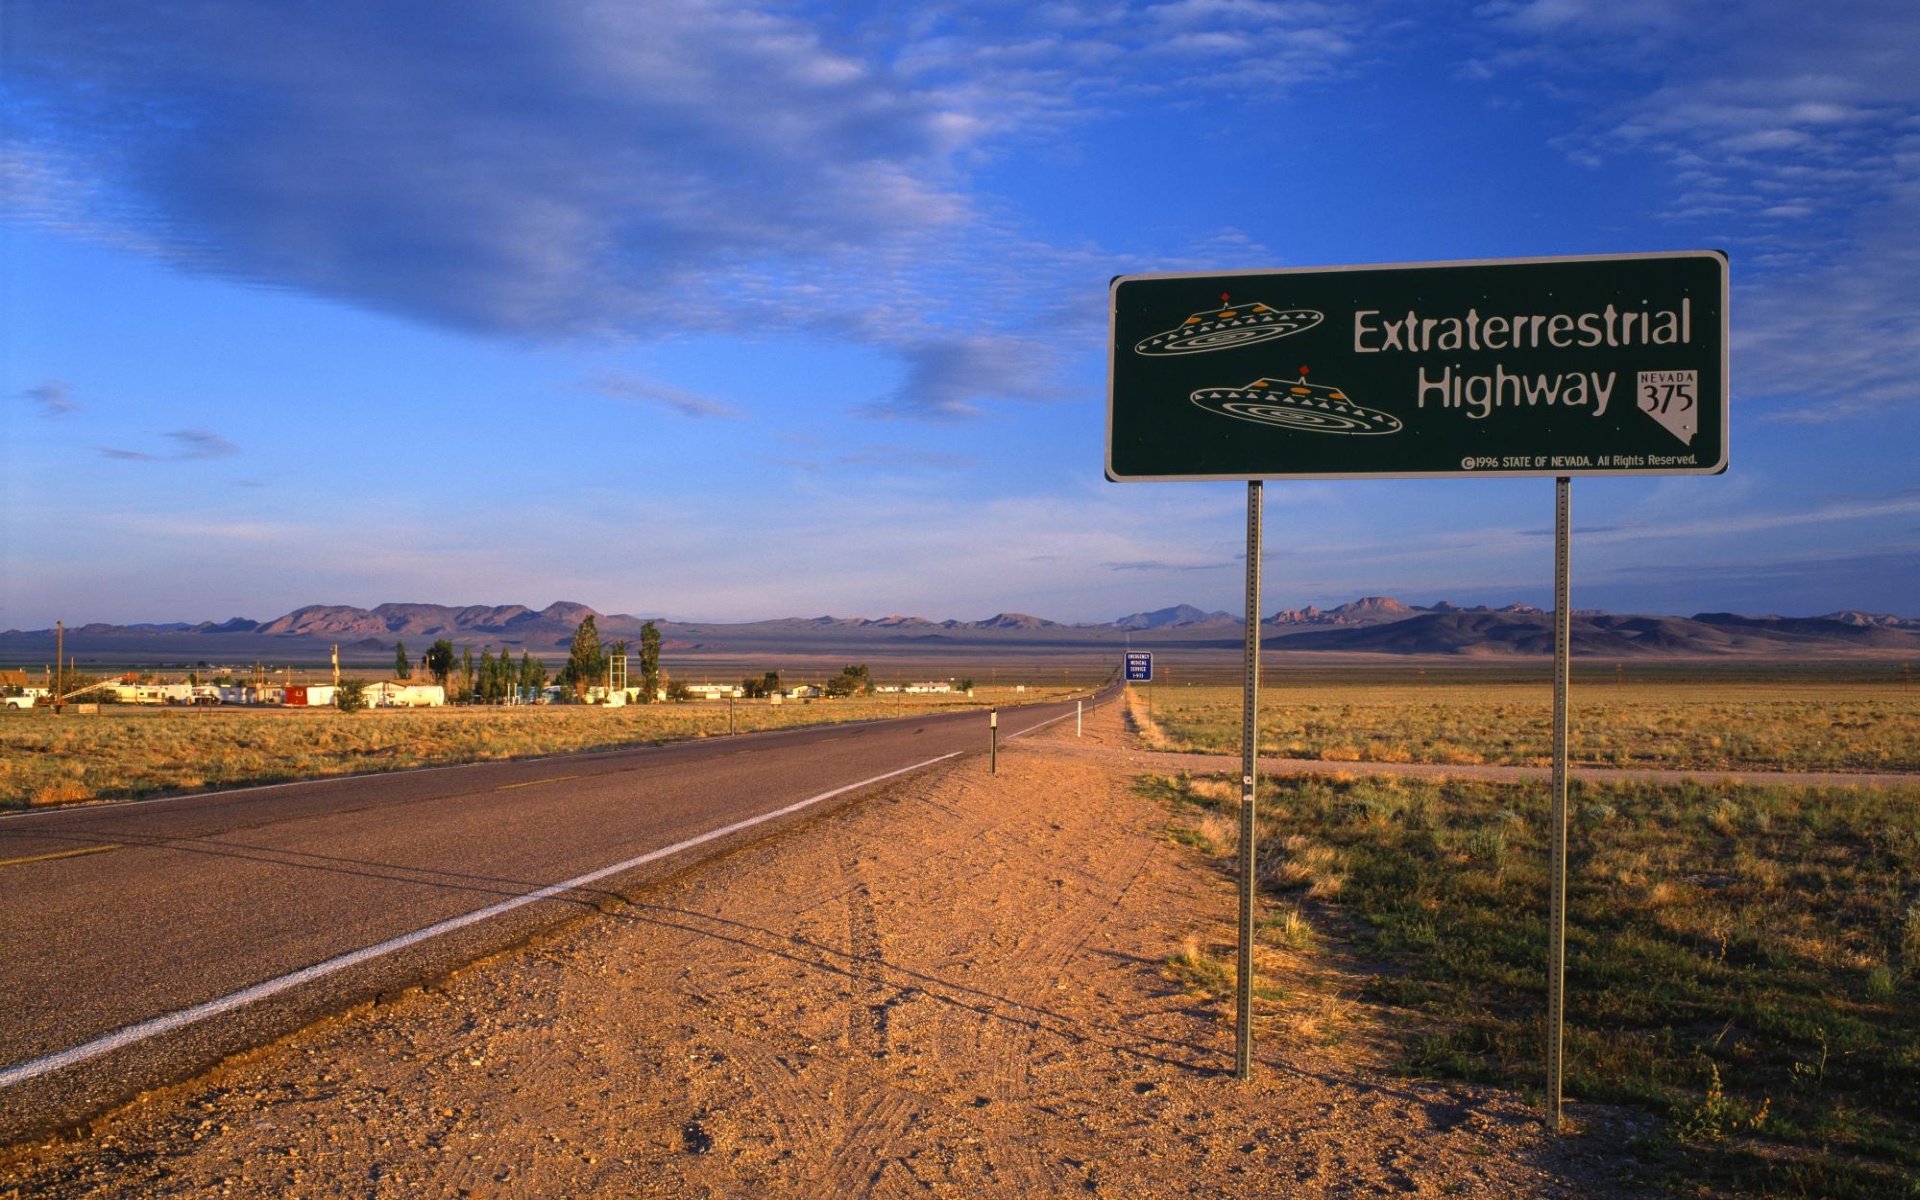 Zastaki - Com - Highway Ufo - Nye County, Extraterrestrial Highway , HD Wallpaper & Backgrounds